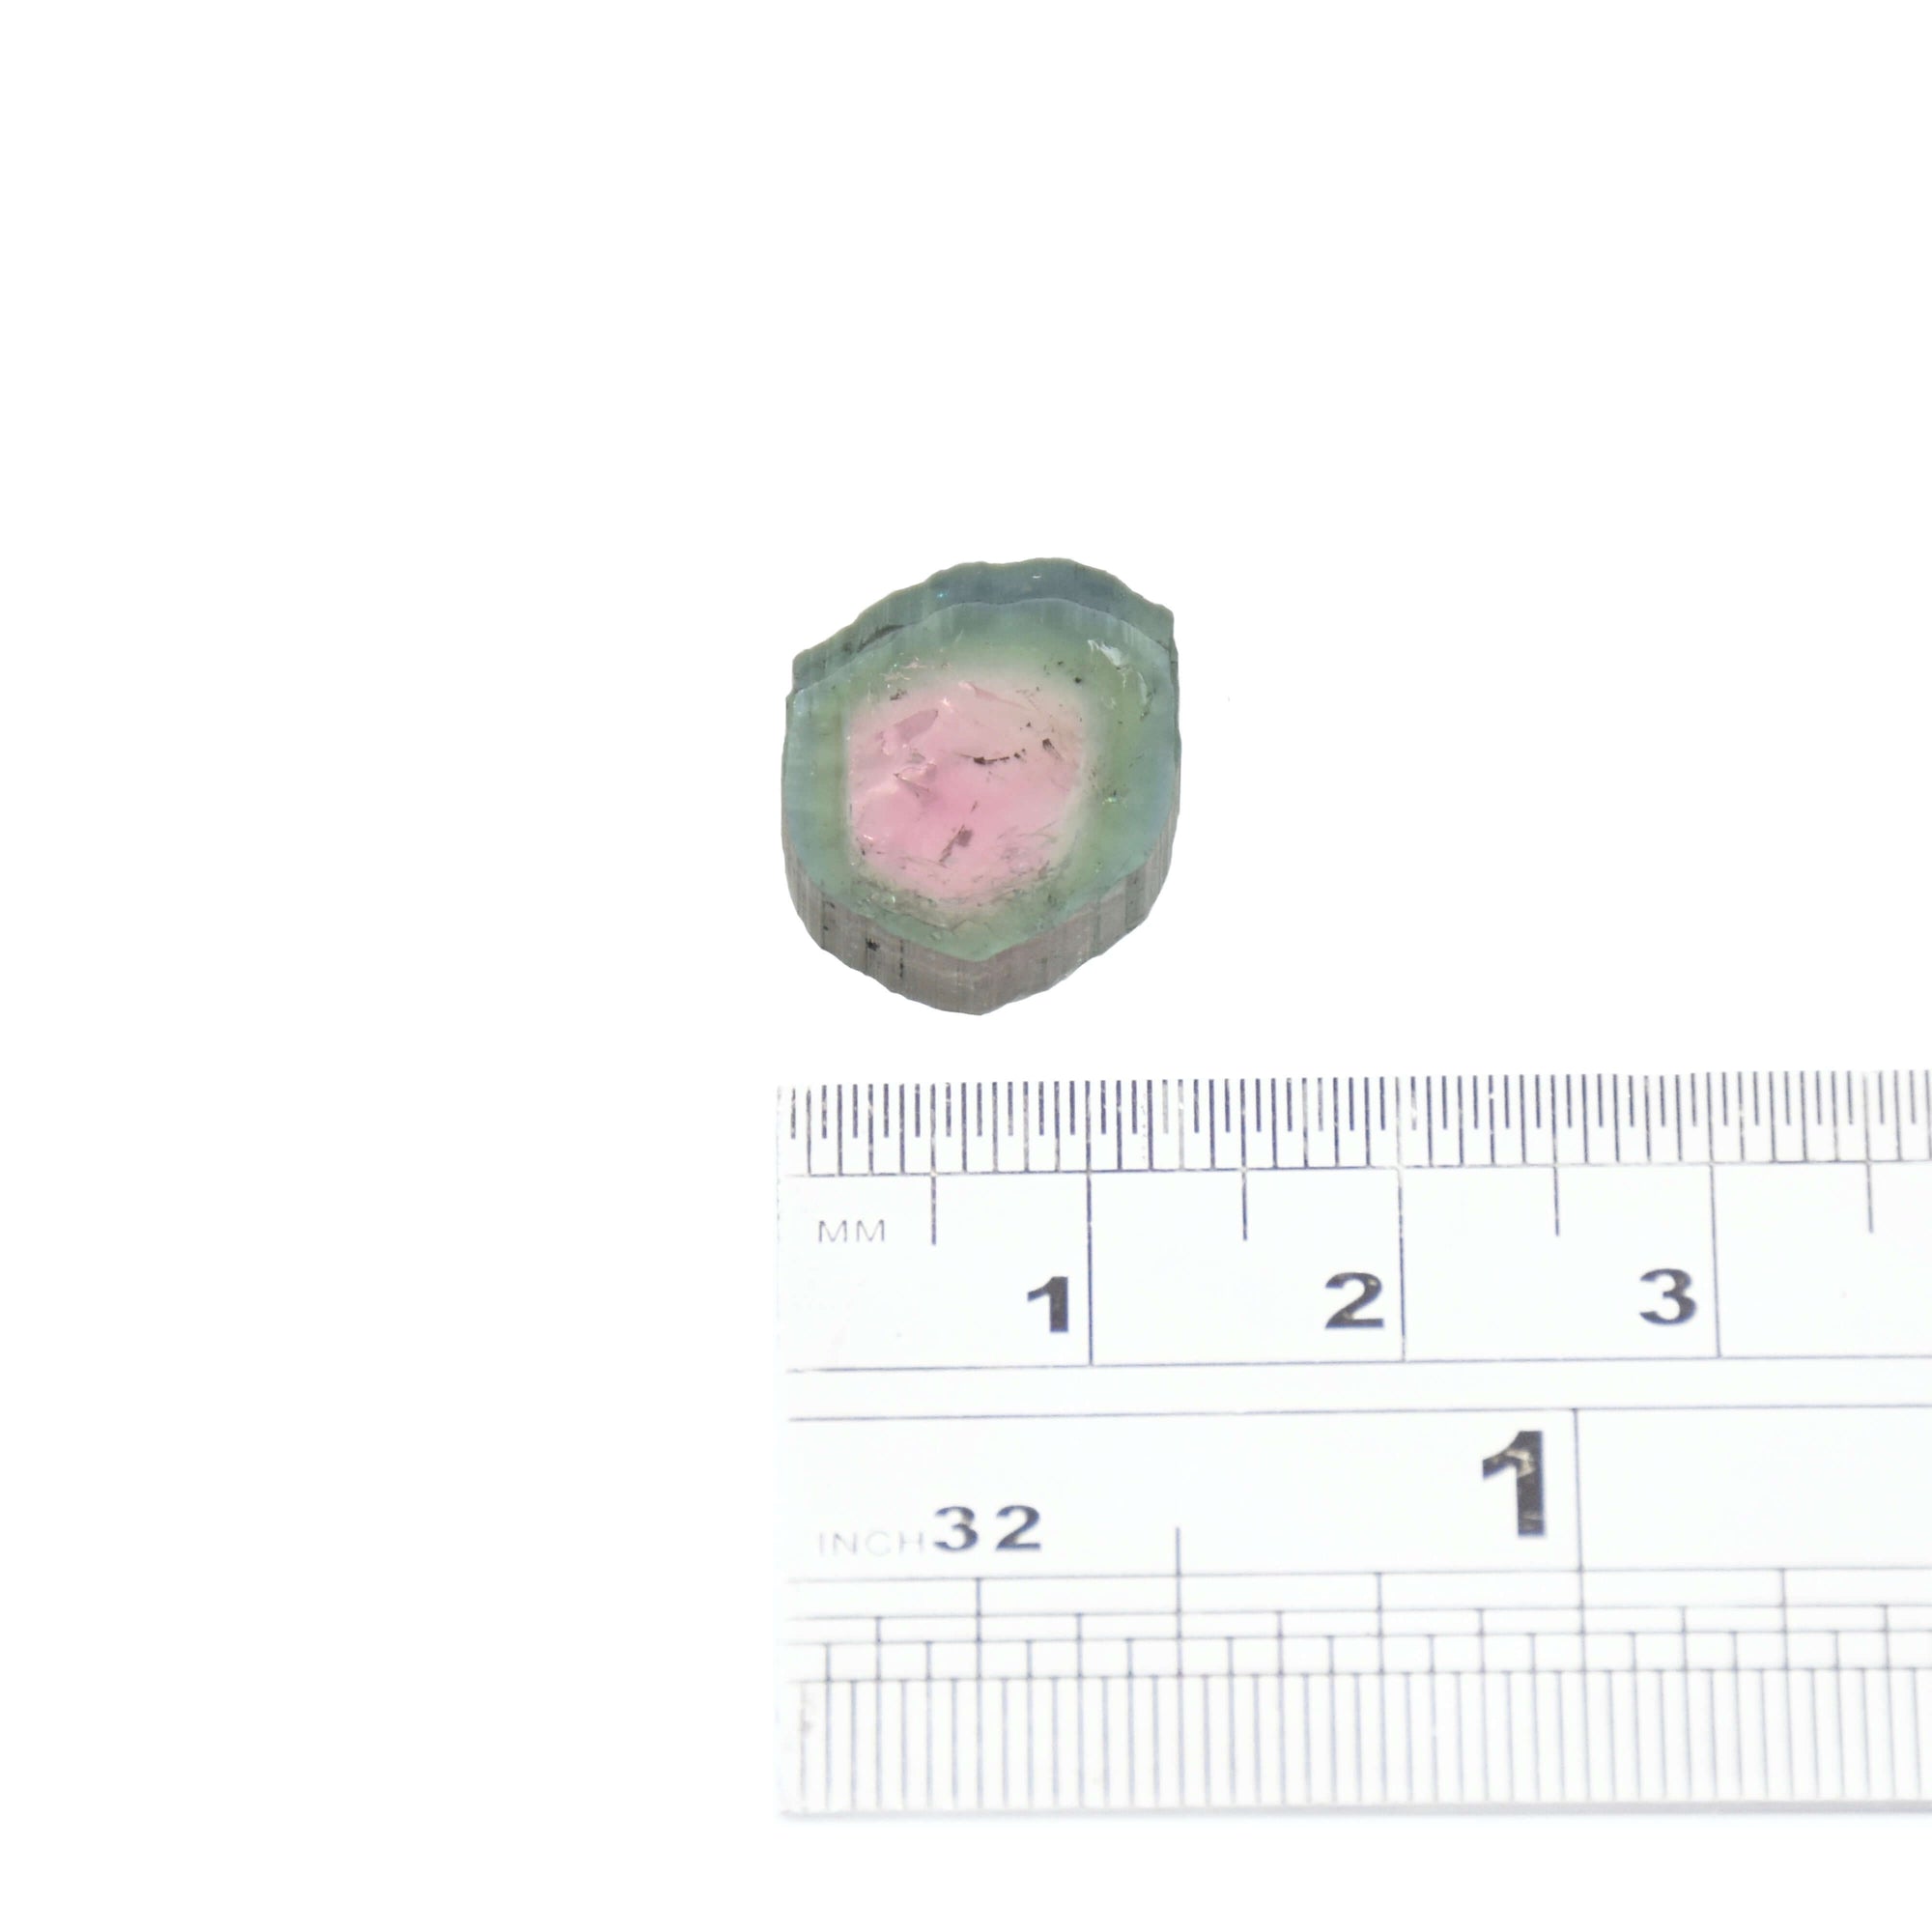 A teal and light pink genuine watermelon tourmaline gemstone